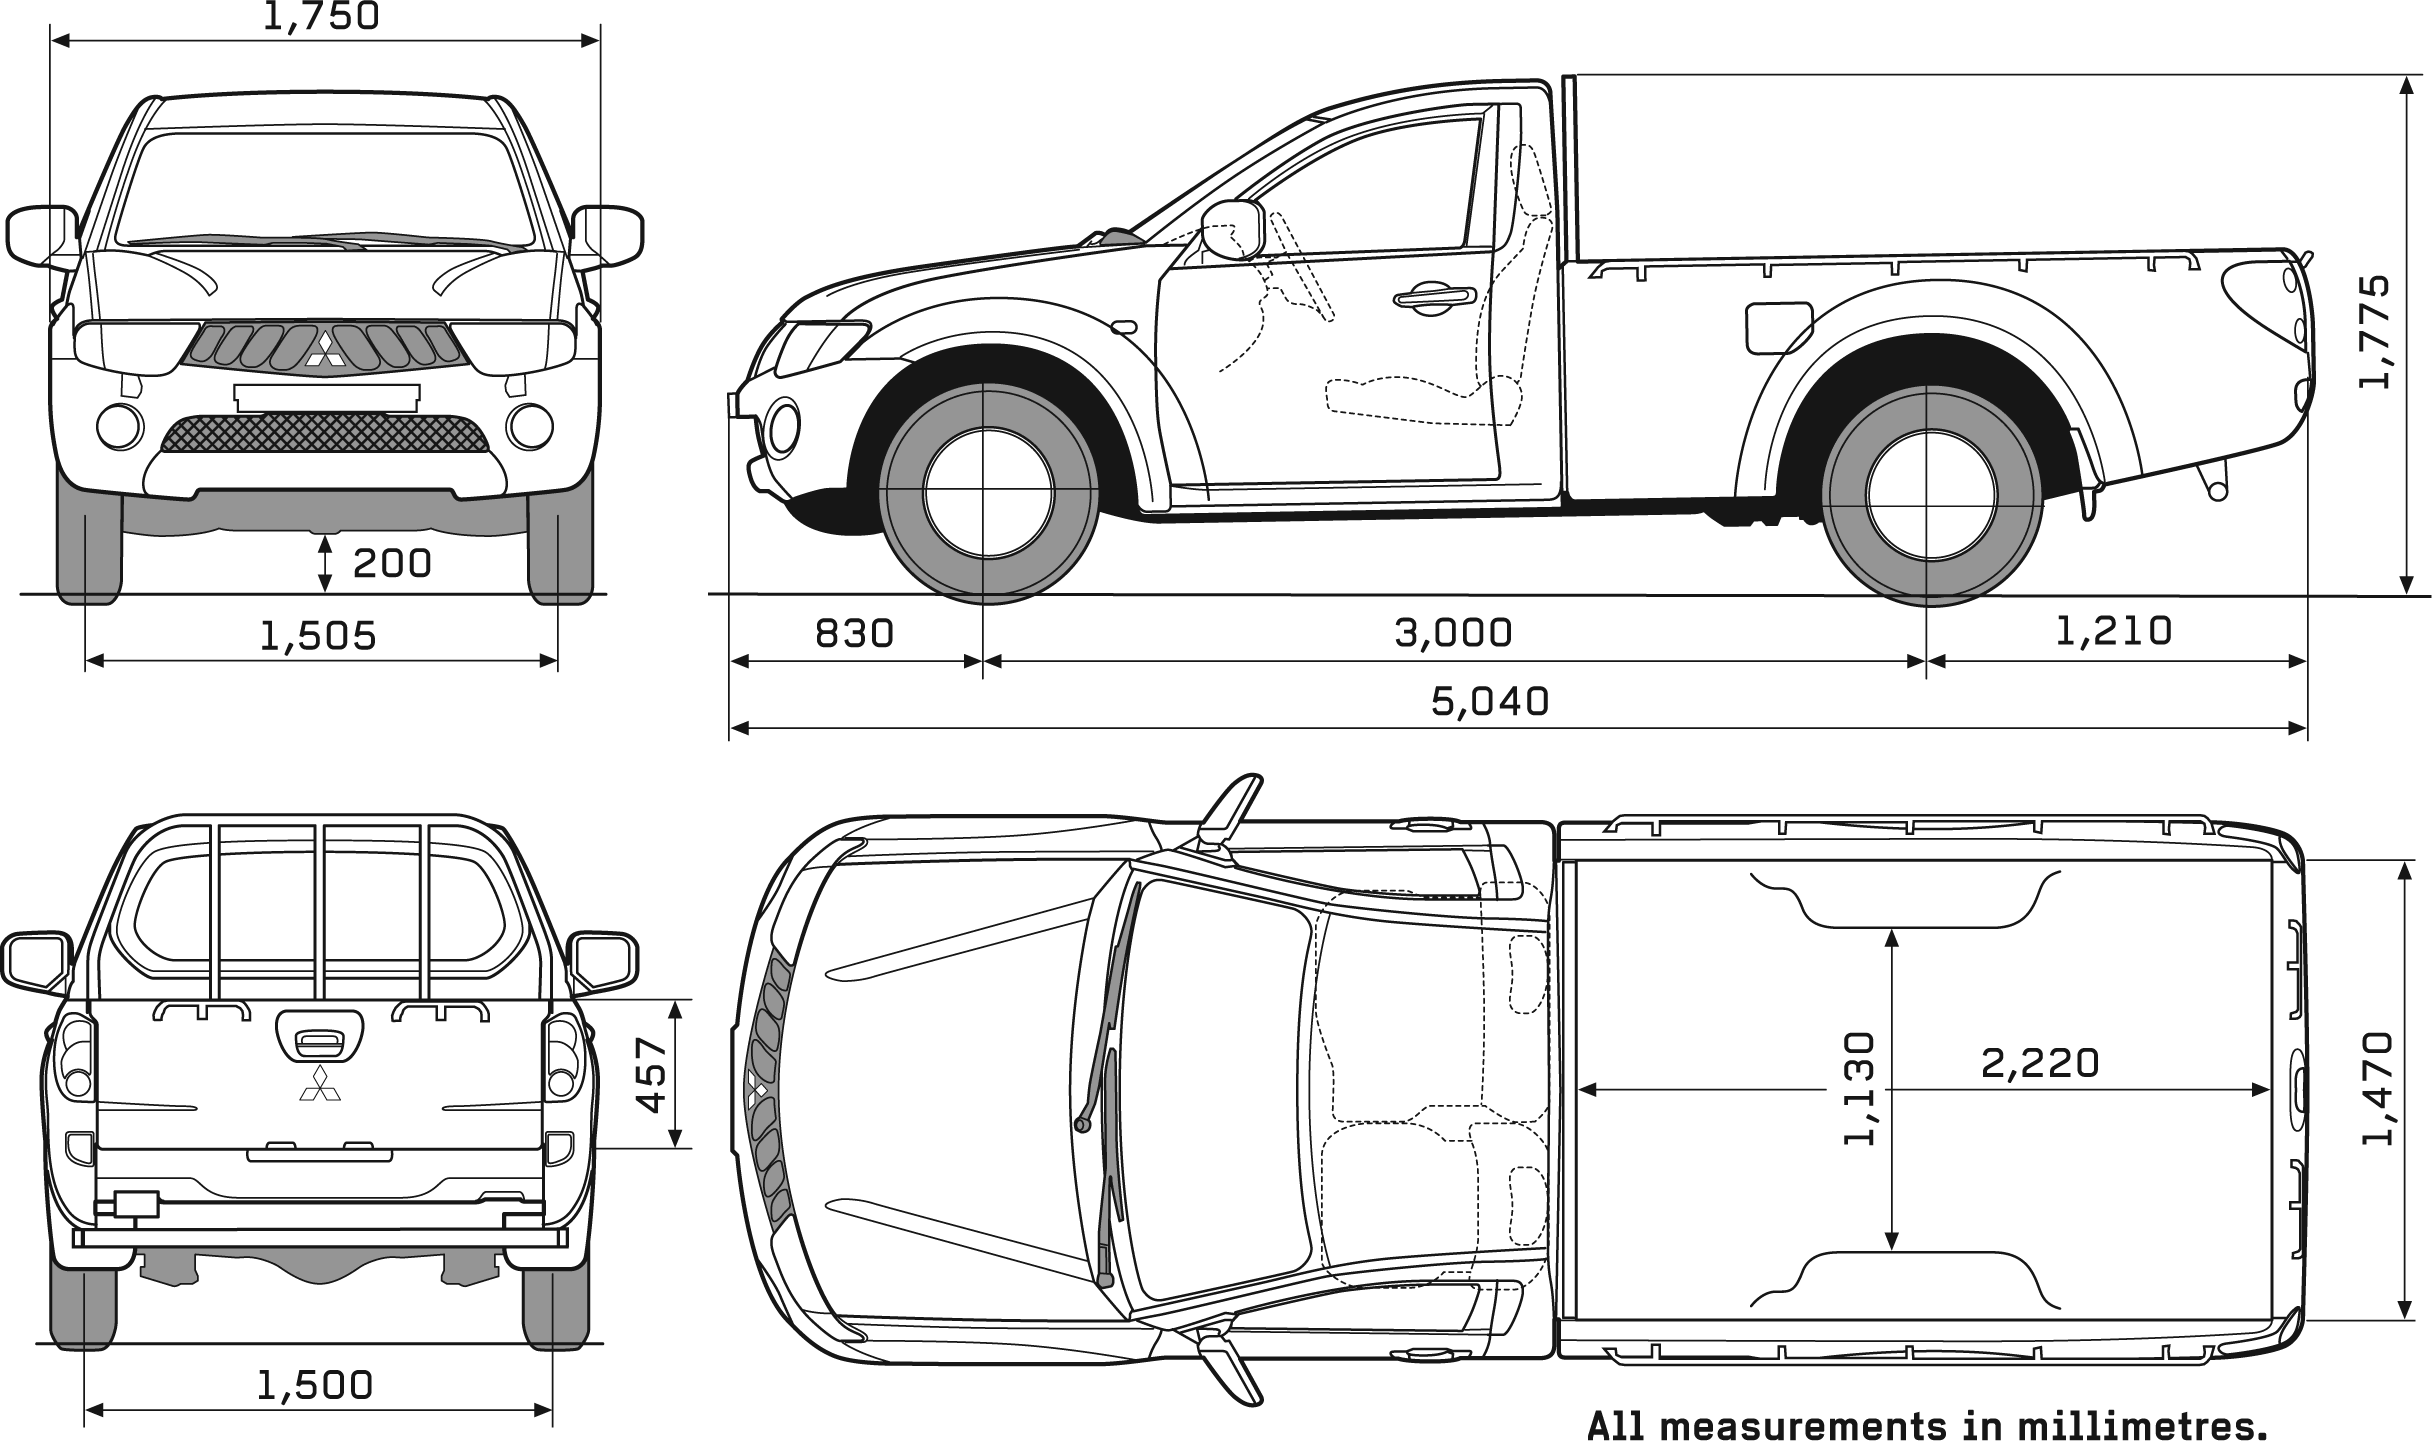 2008 Mitsubishi L200 Single Cab Pickup Truck blueprints